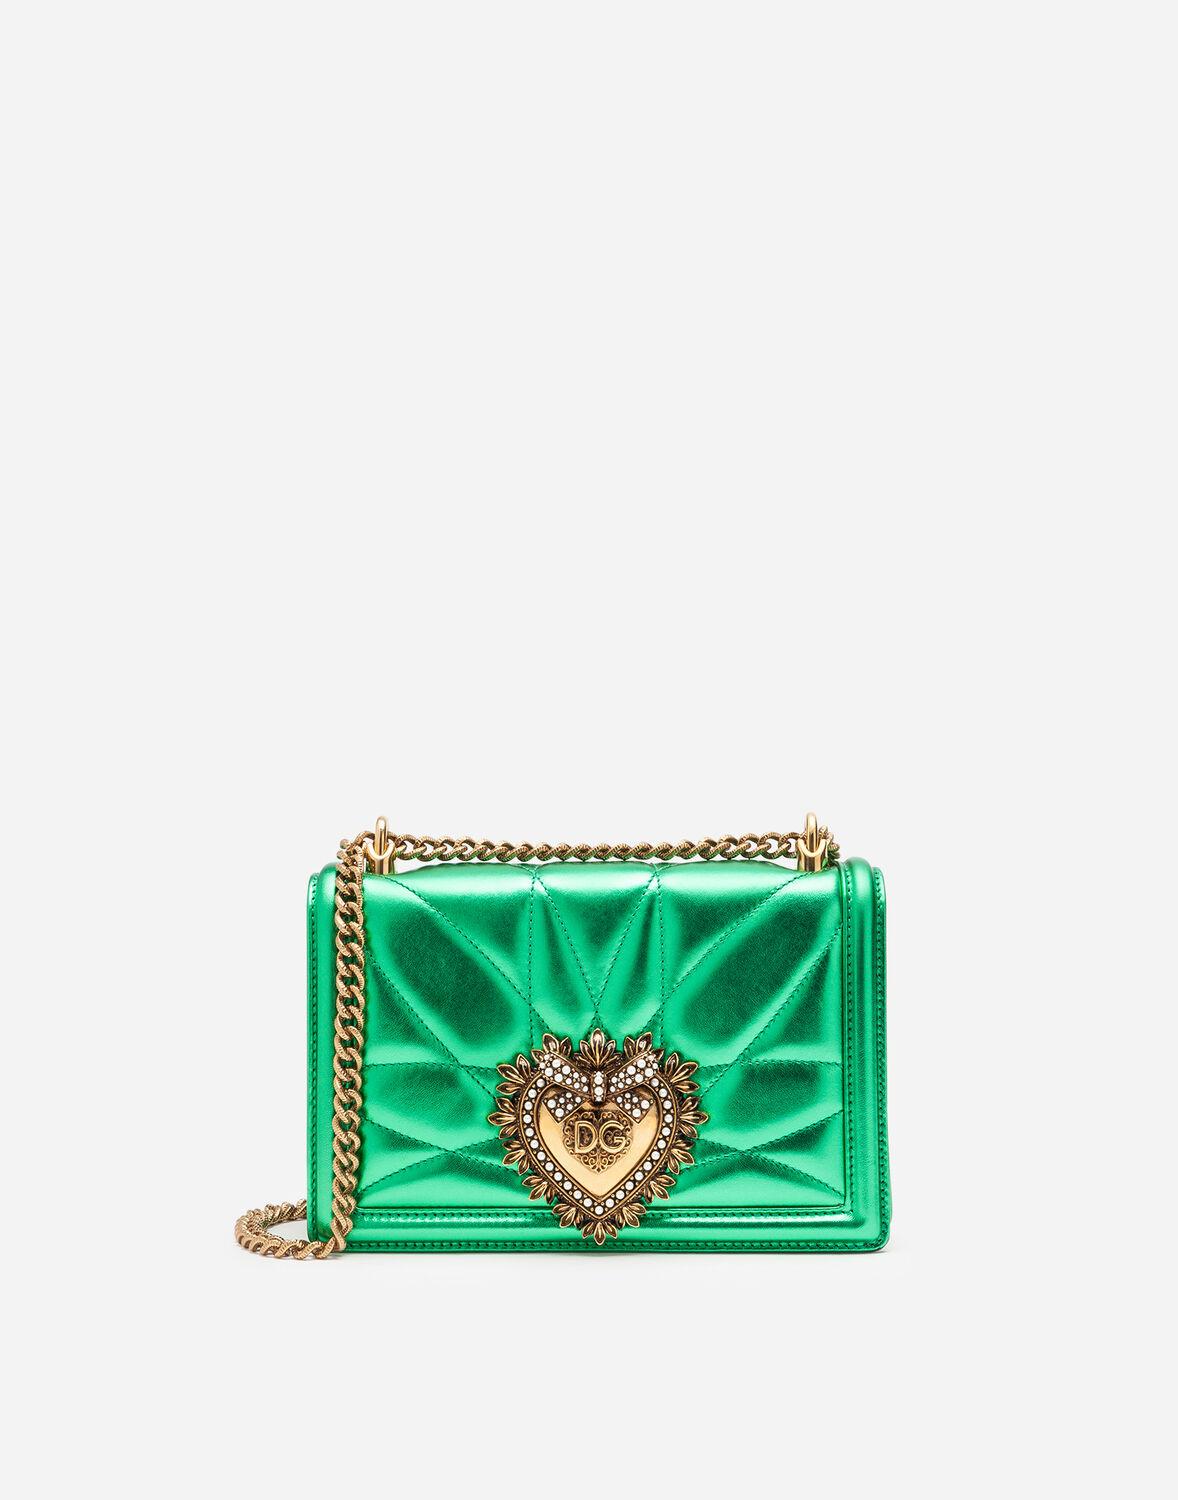 Dolce & Gabbana Green Quilted Nappa Leather Large Devotion Shoulder Bag